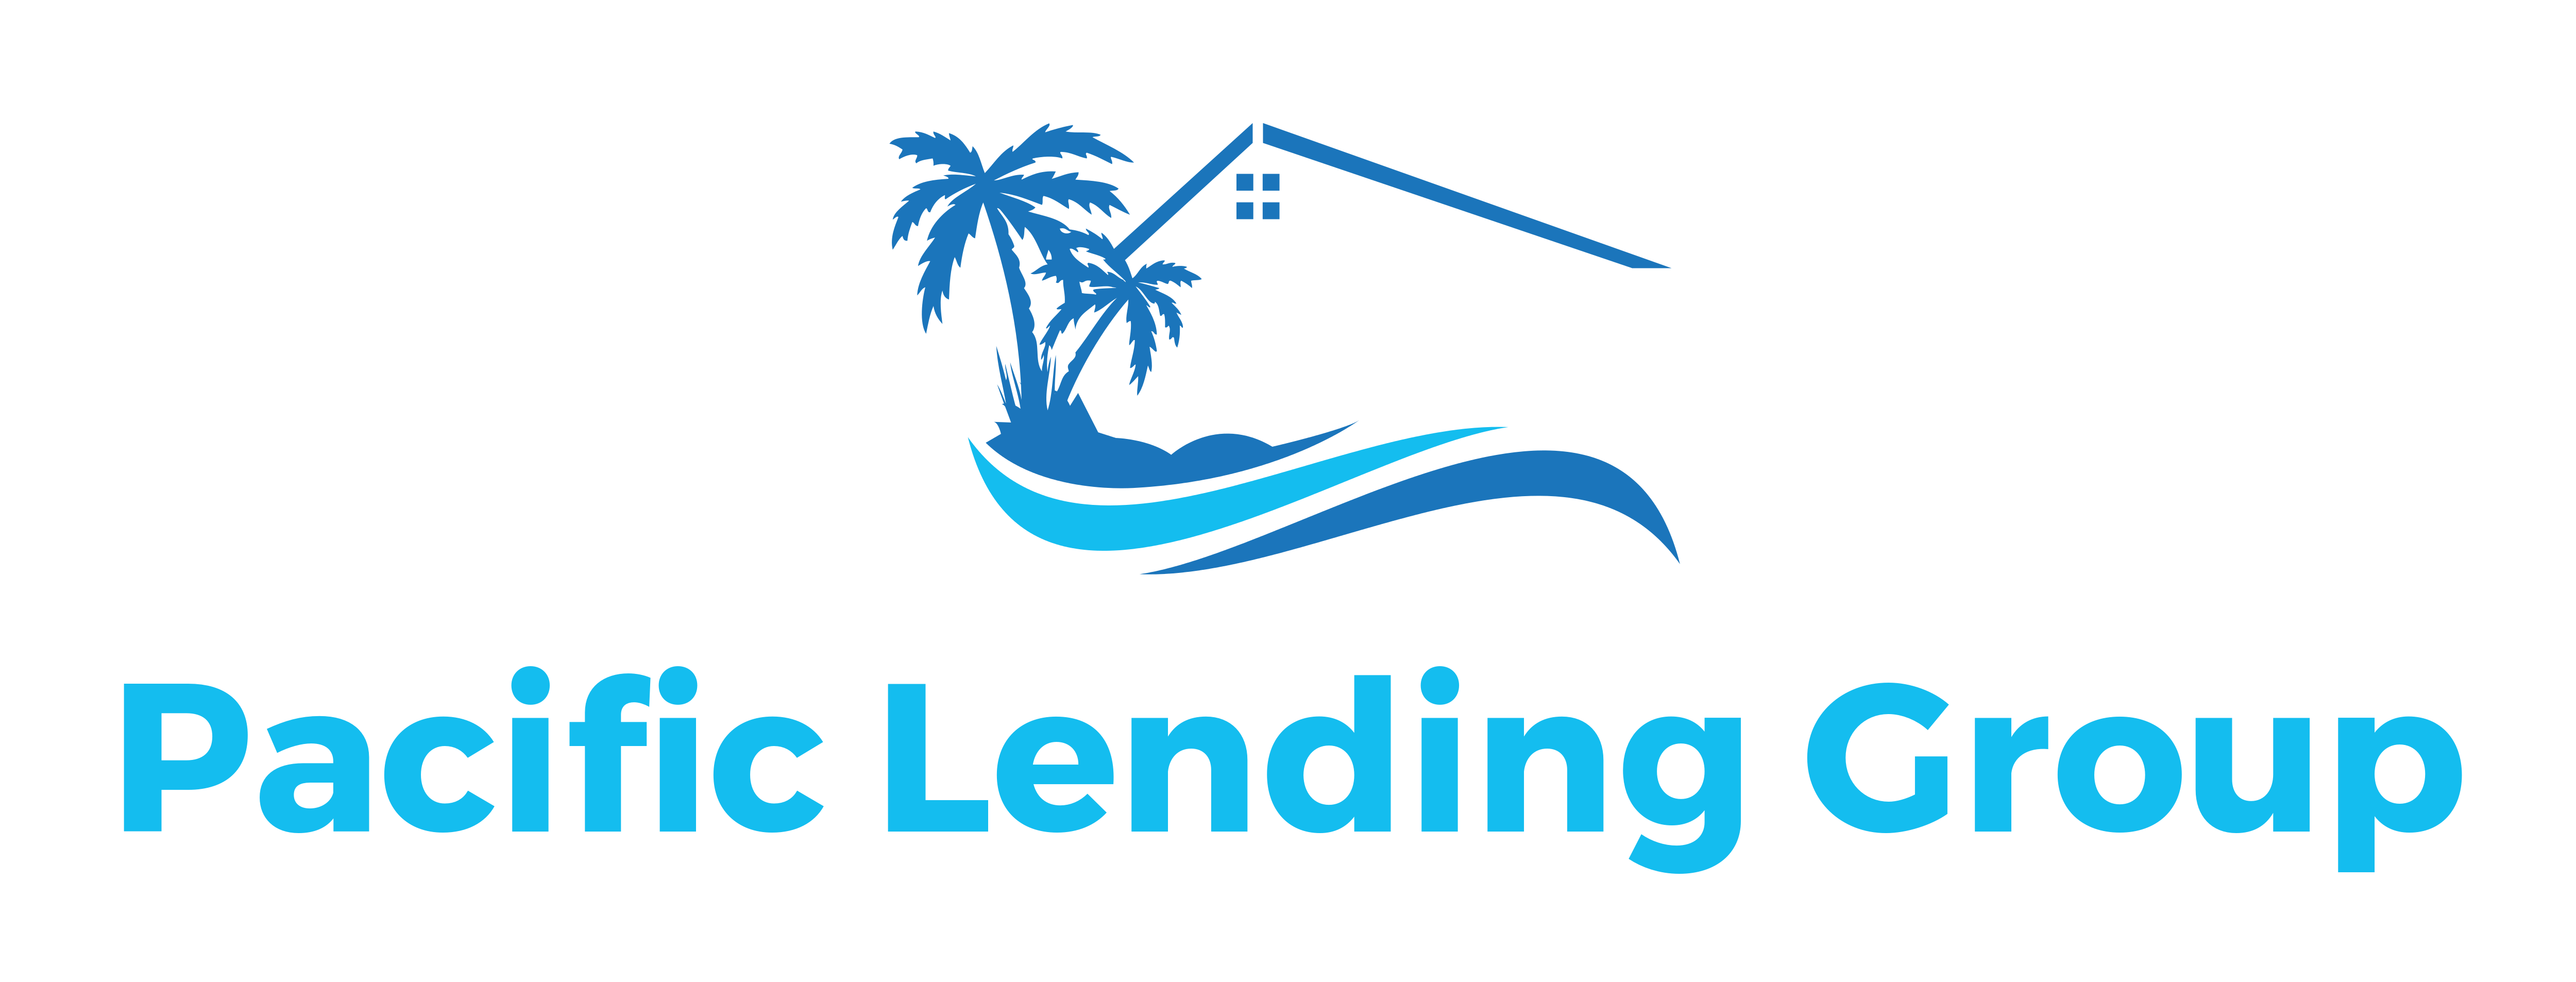 Pacific Lending Group Inc.